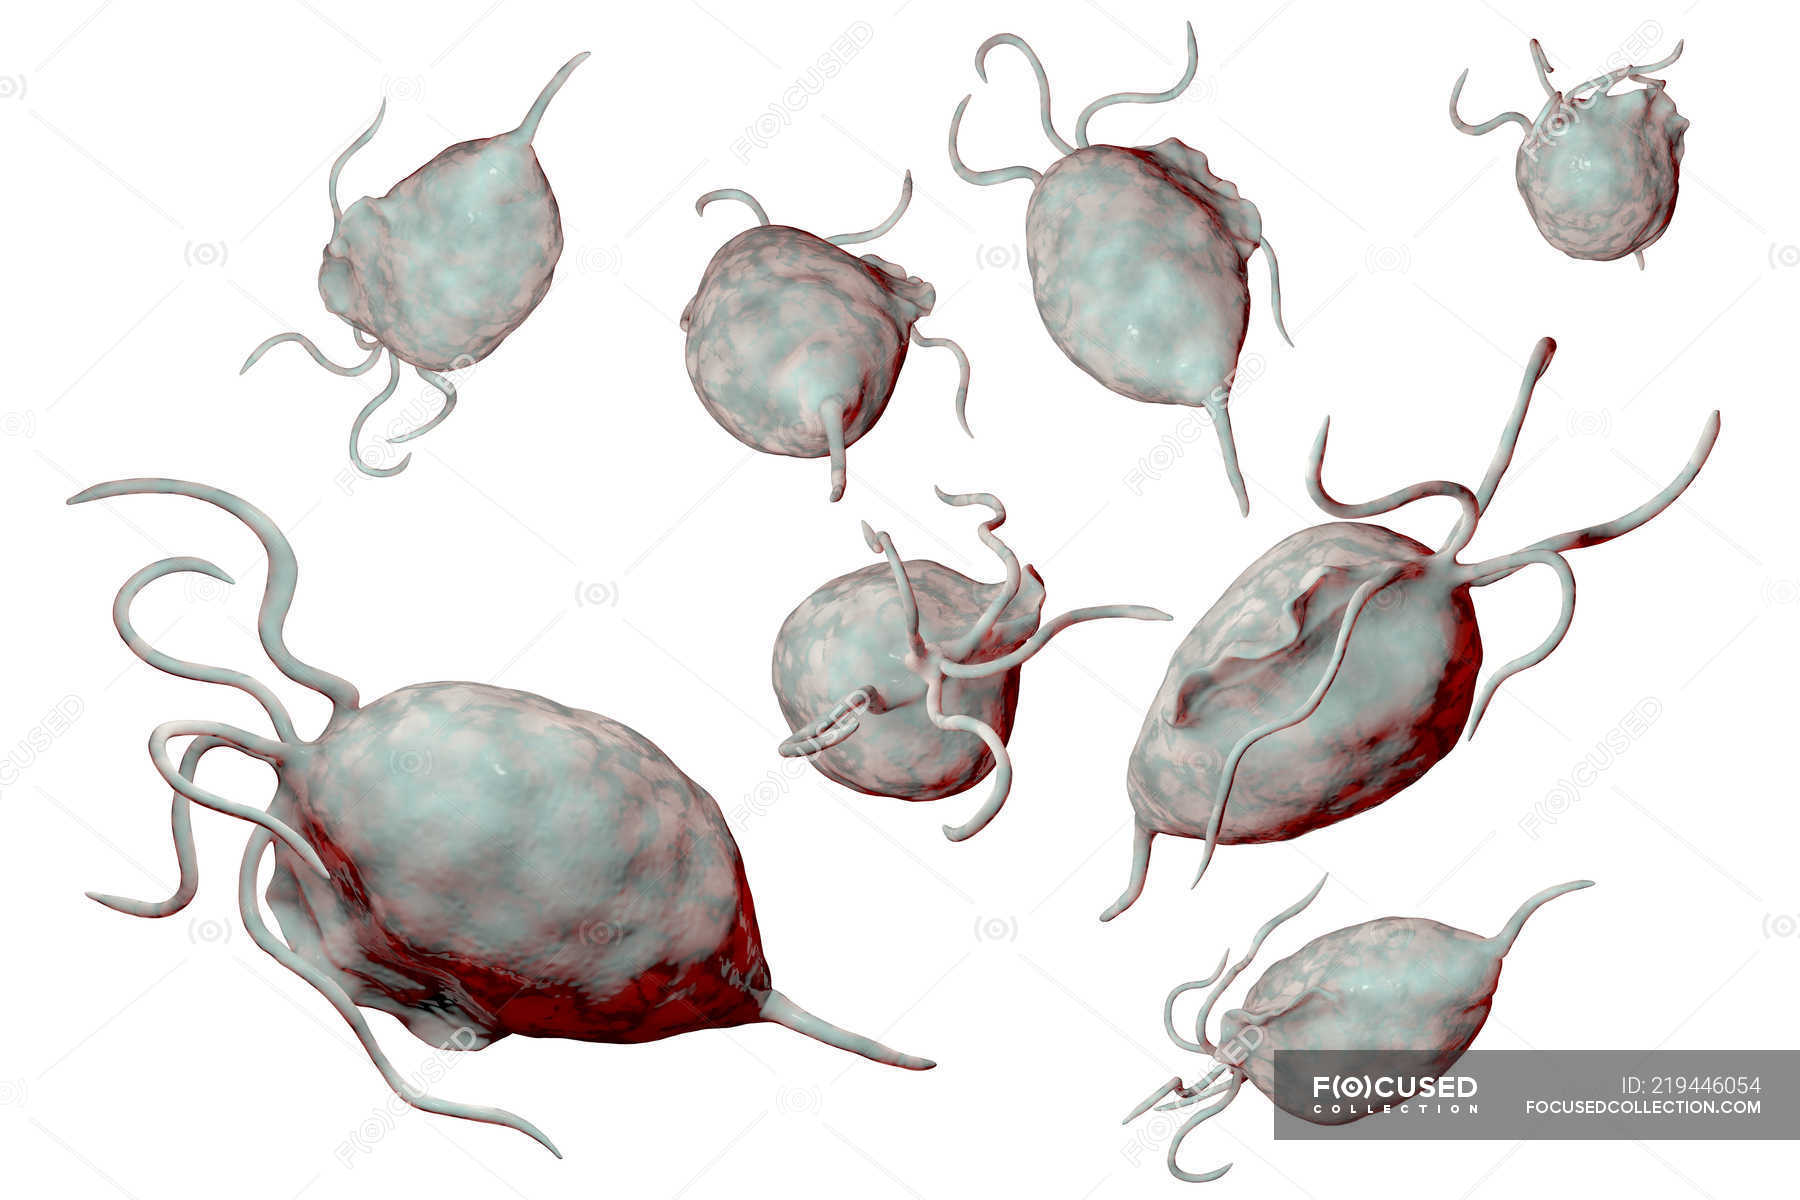 gonococcus Trichomonas vaginalis szal